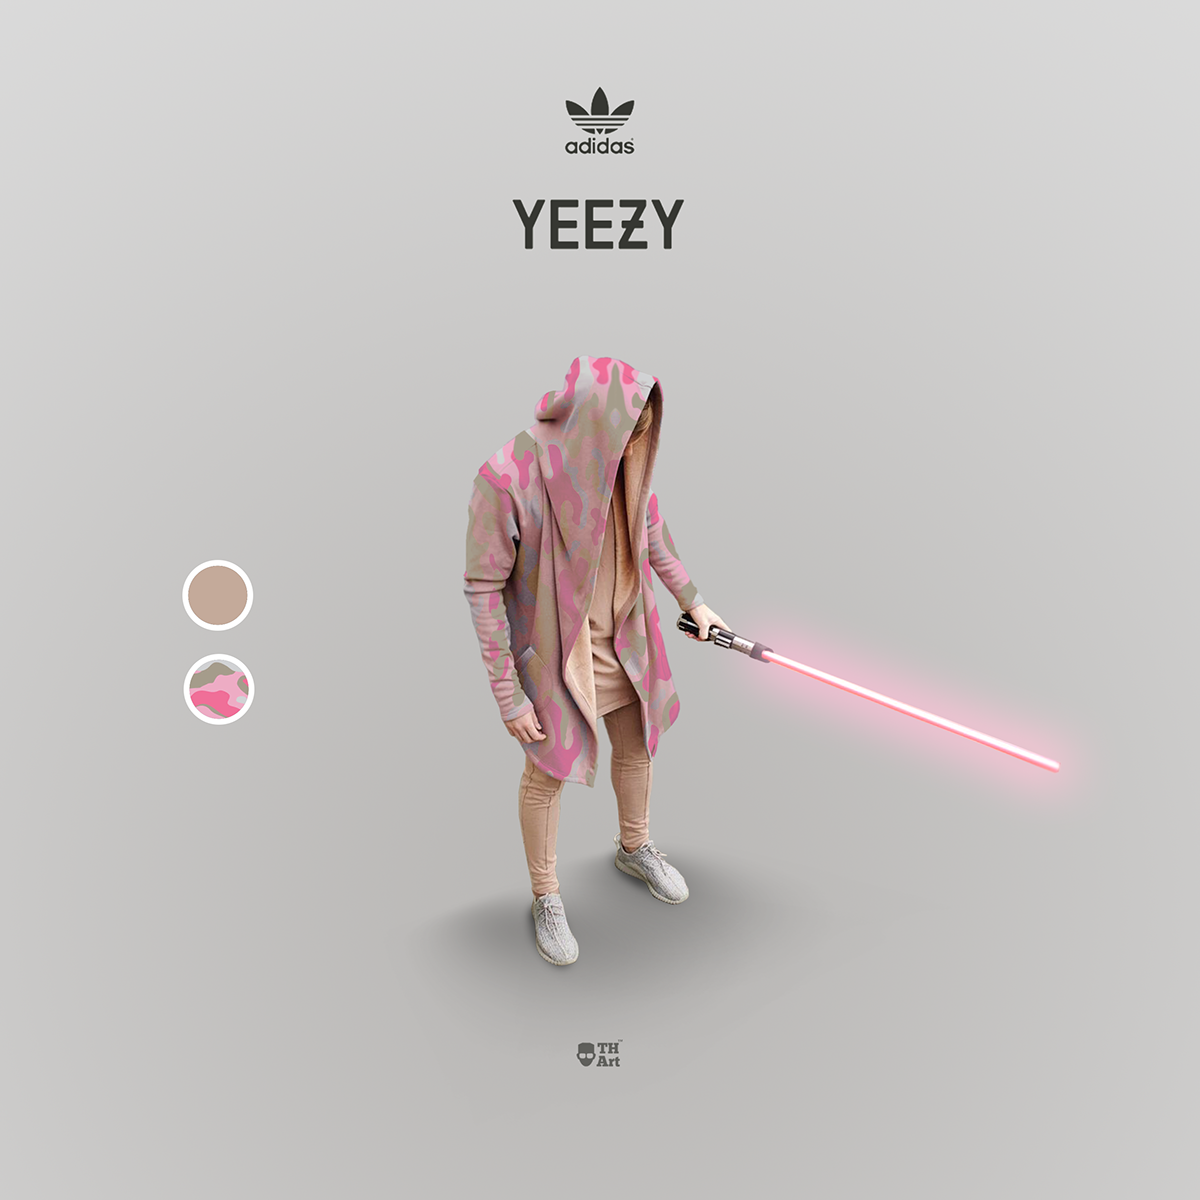 adidas Kanye West star wars brand collage